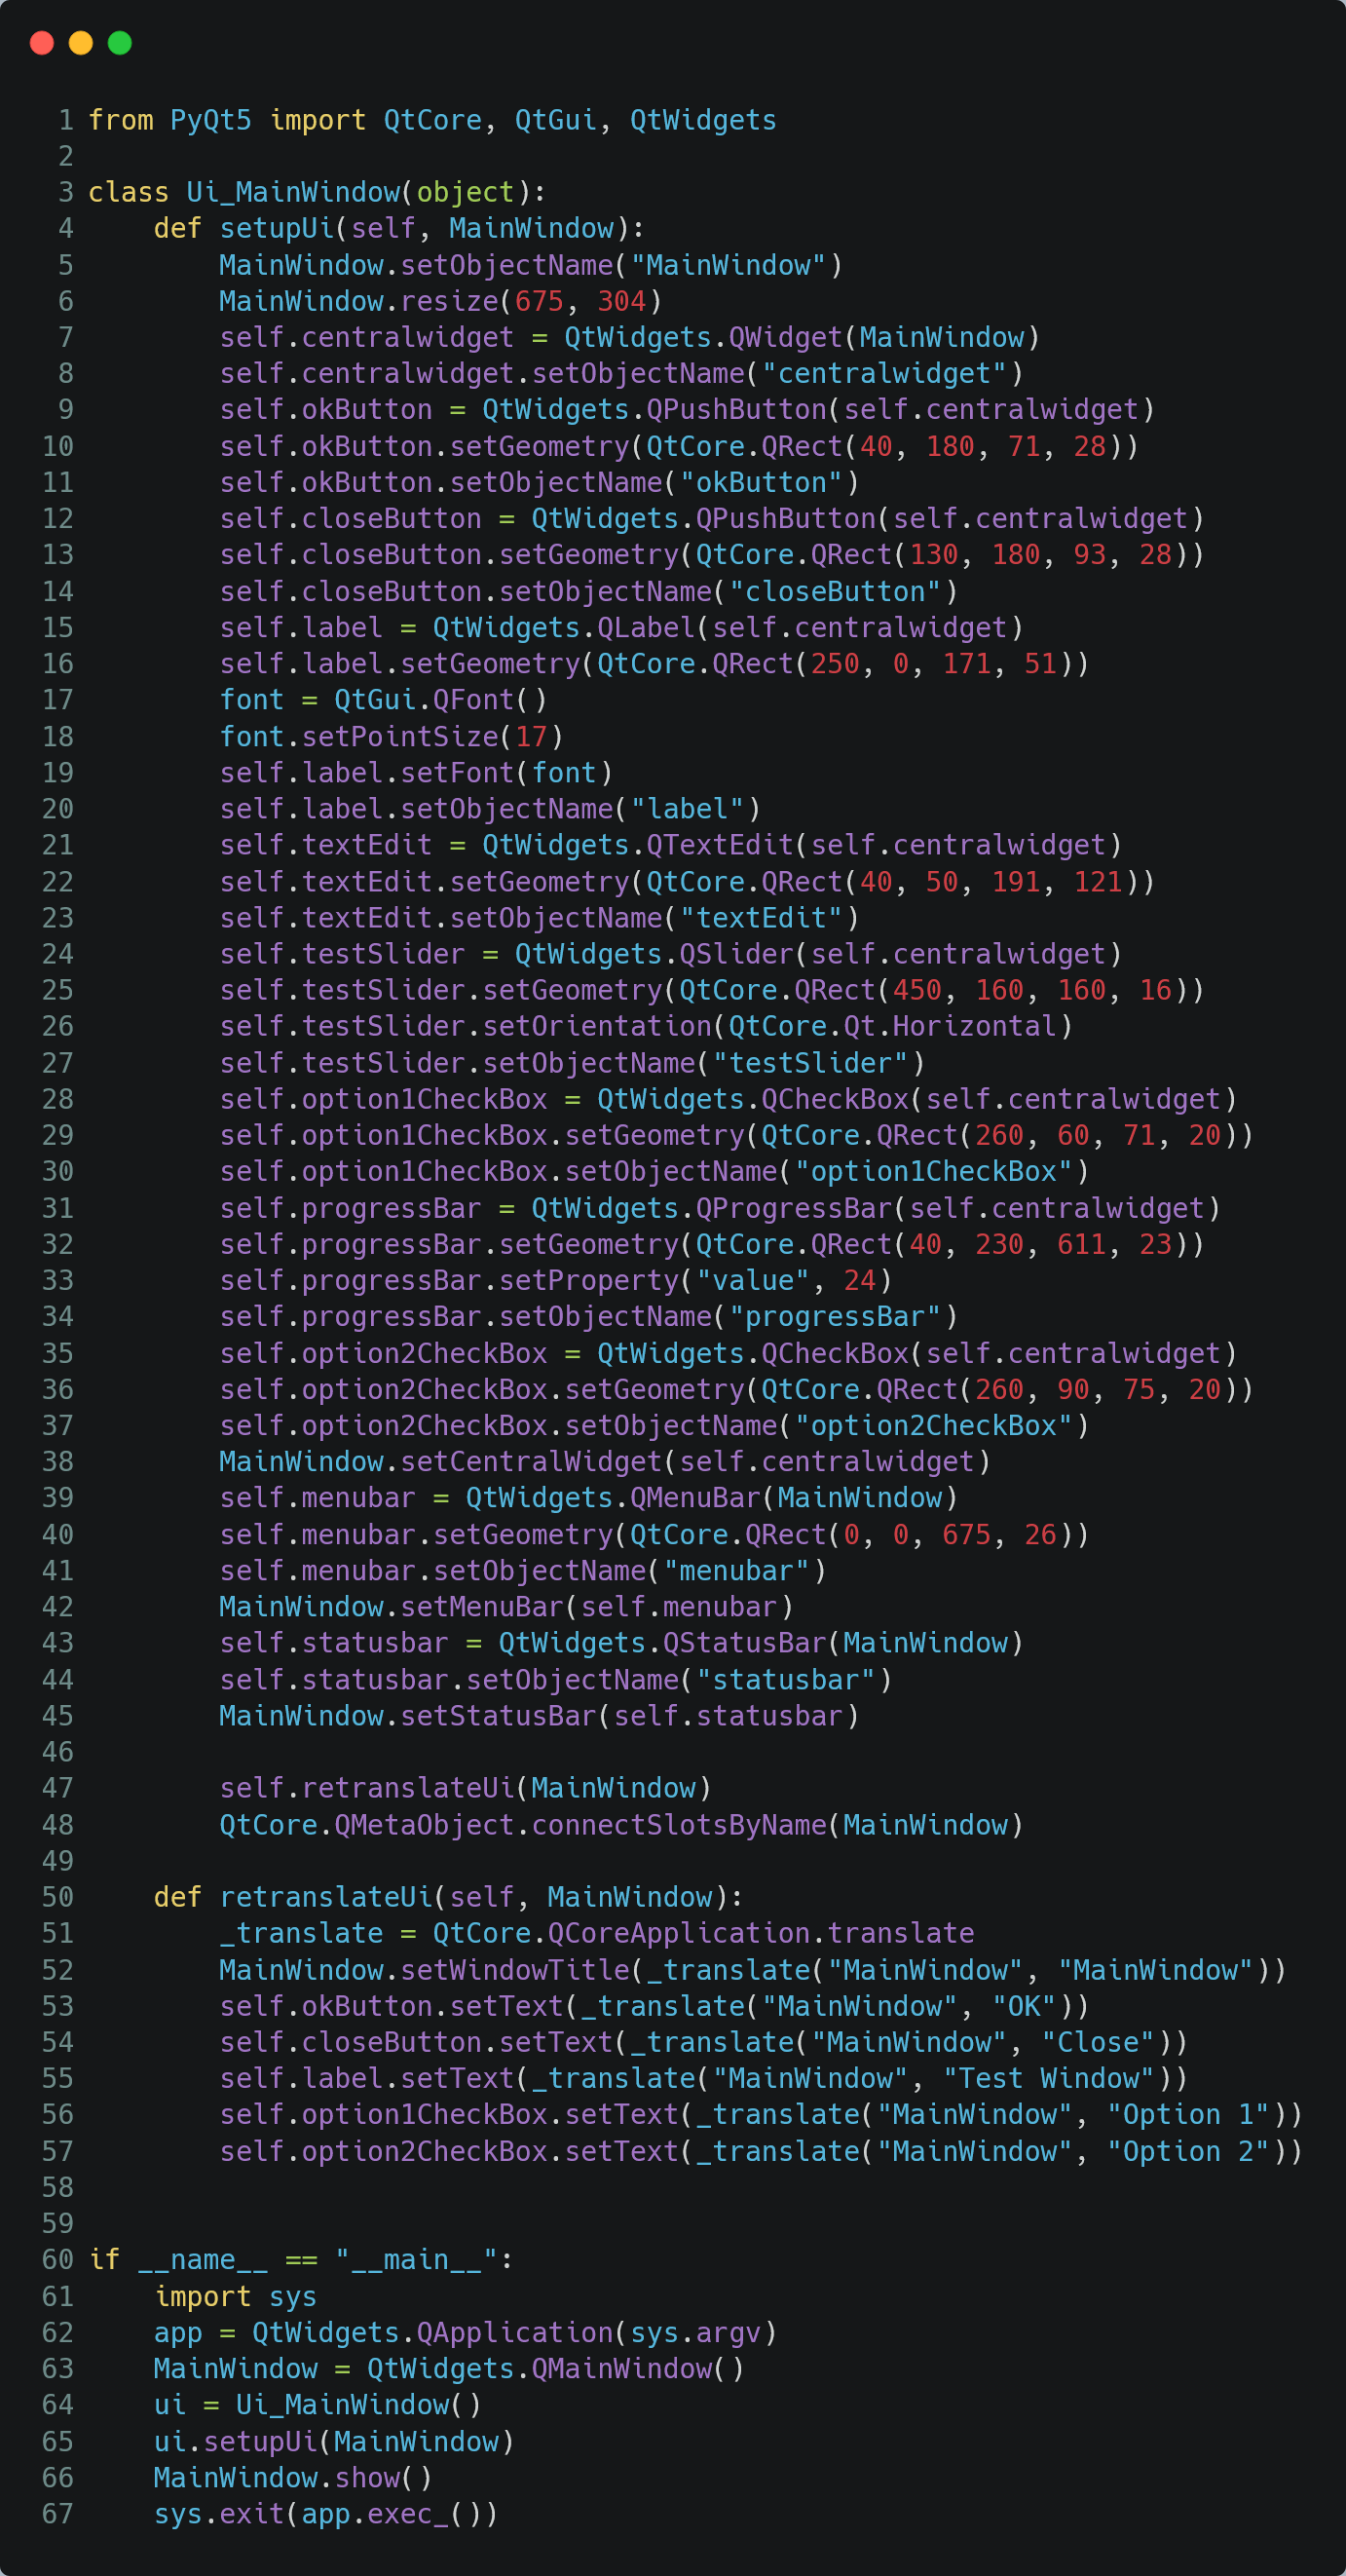 UI converted into python code